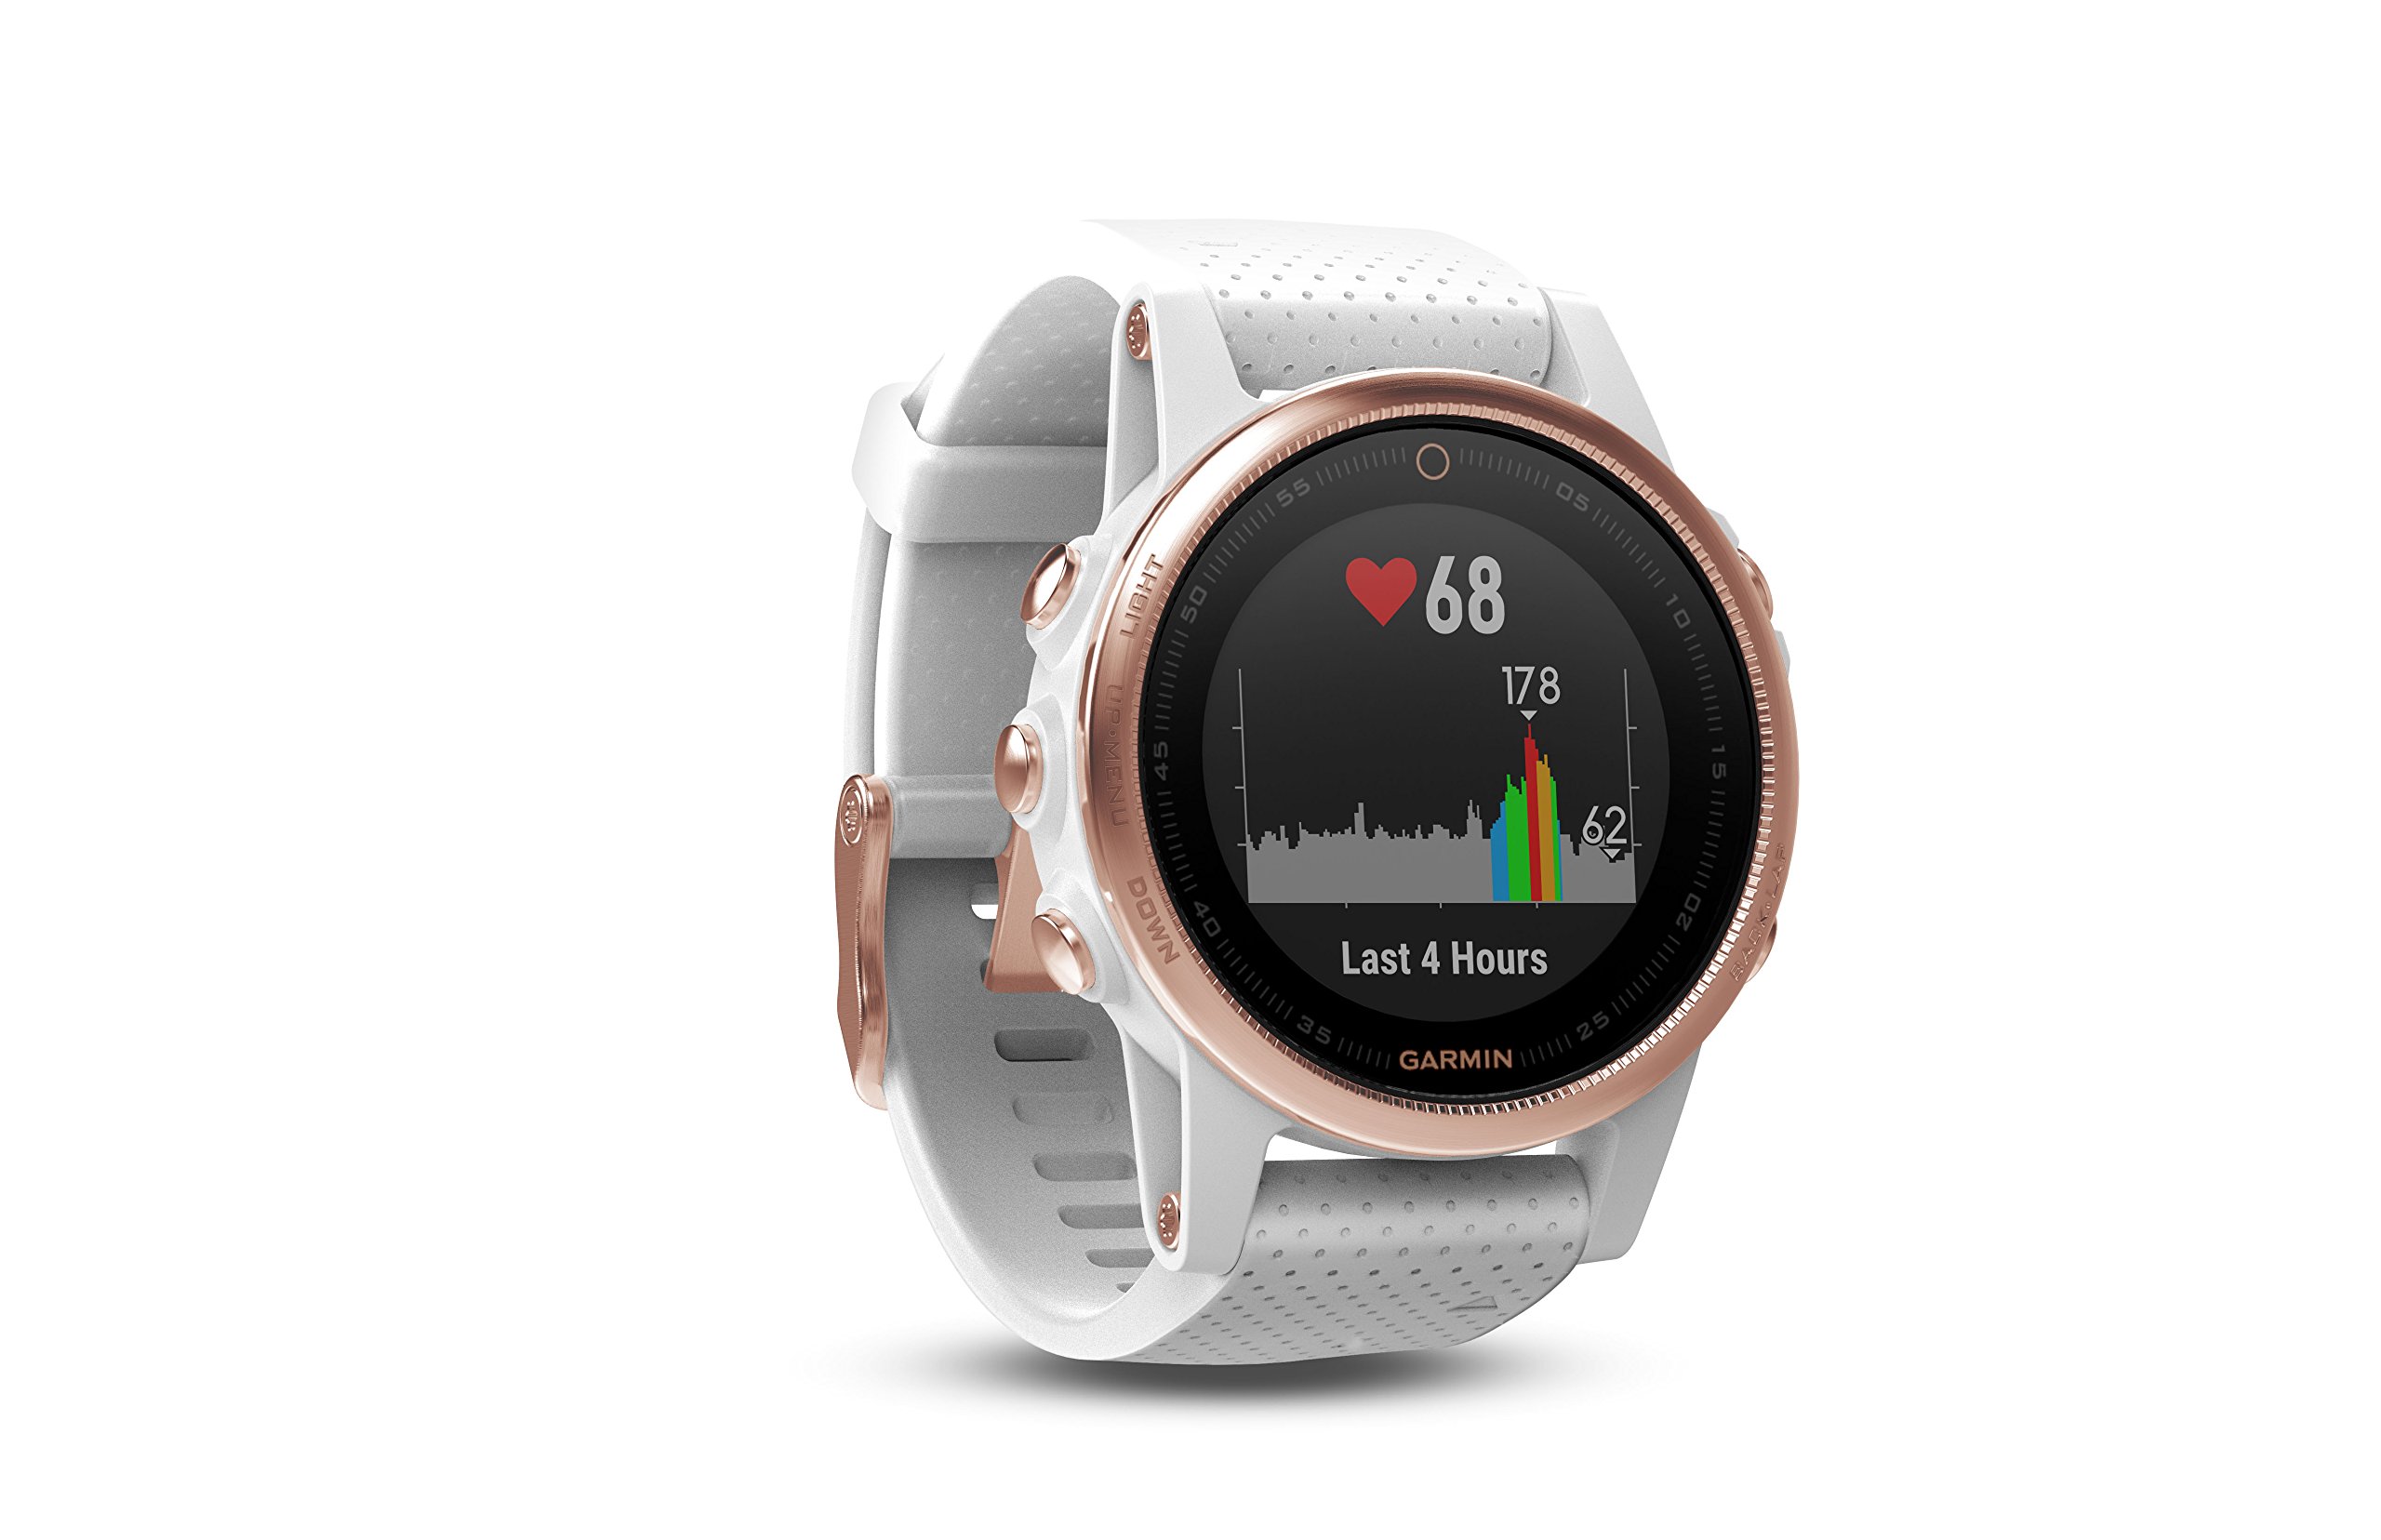 Garmin fēnix 5s, Premium and Rugged Smaller-Sized Multisport GPS Smartwatch, Sapphire Glass, Rose Gold/White